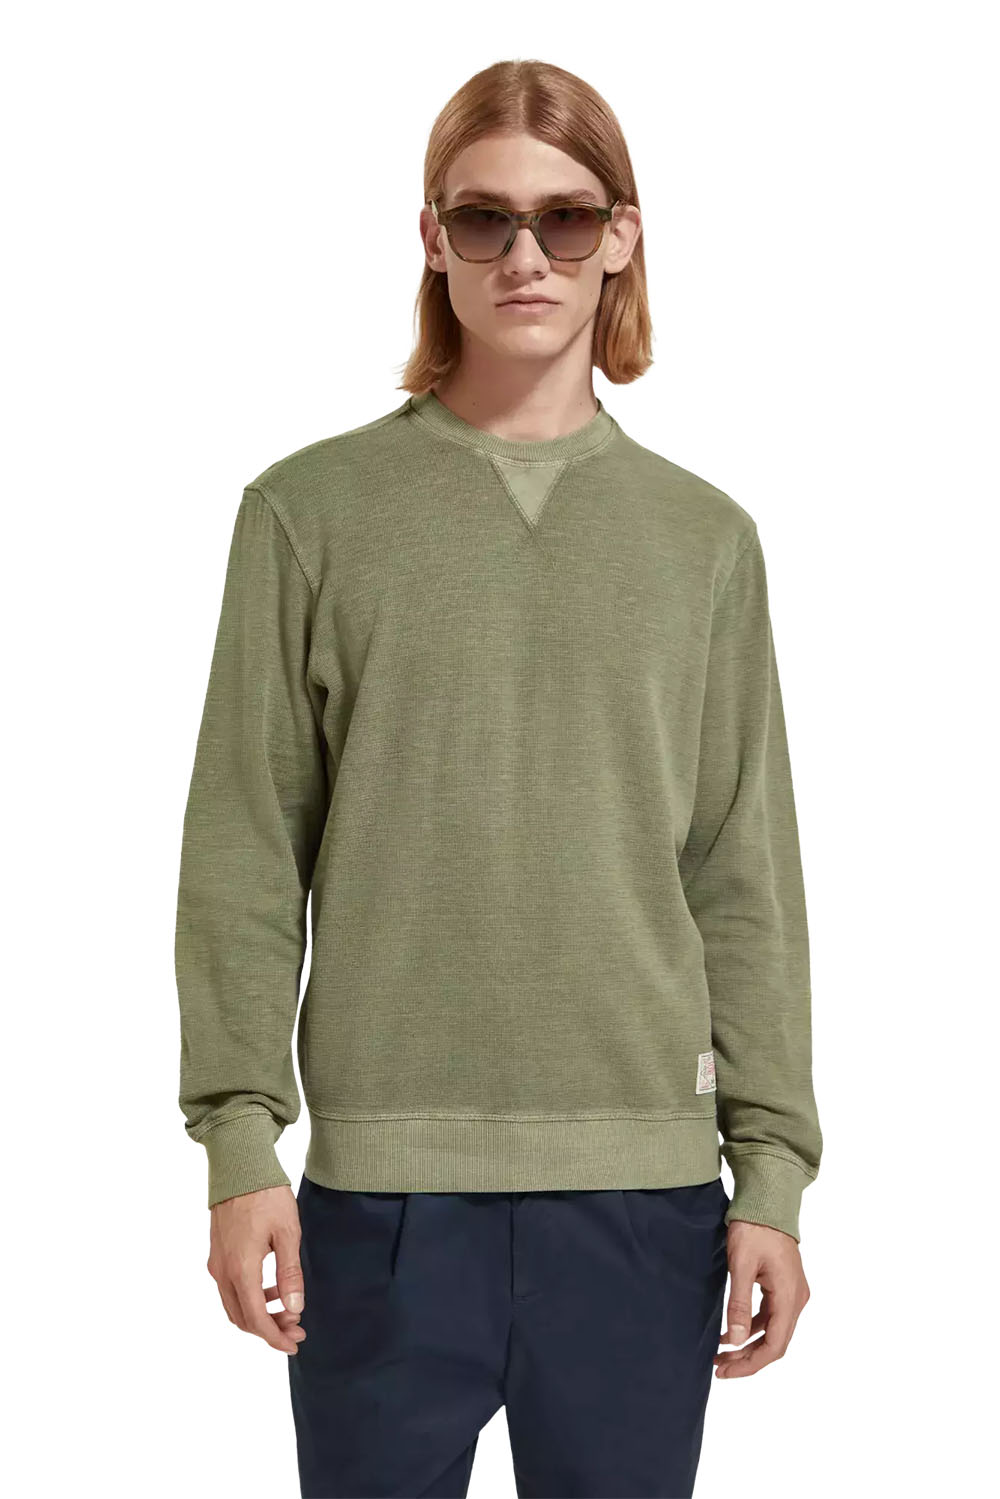 Scotch & Soda - Garment Dyed Sweatshirt - Army - Front